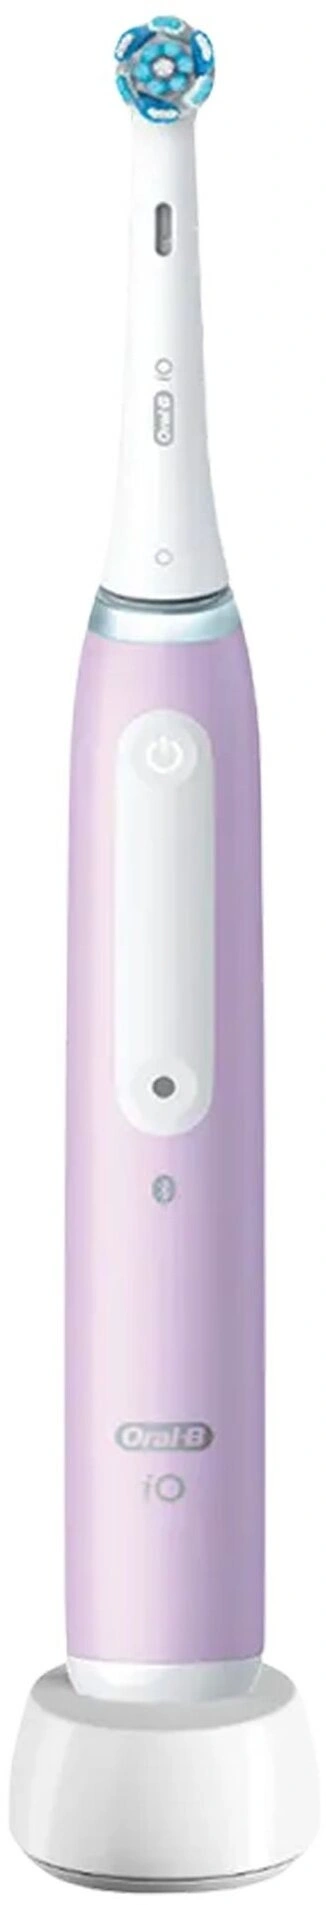 Oral-B iO Series 4 Lavender